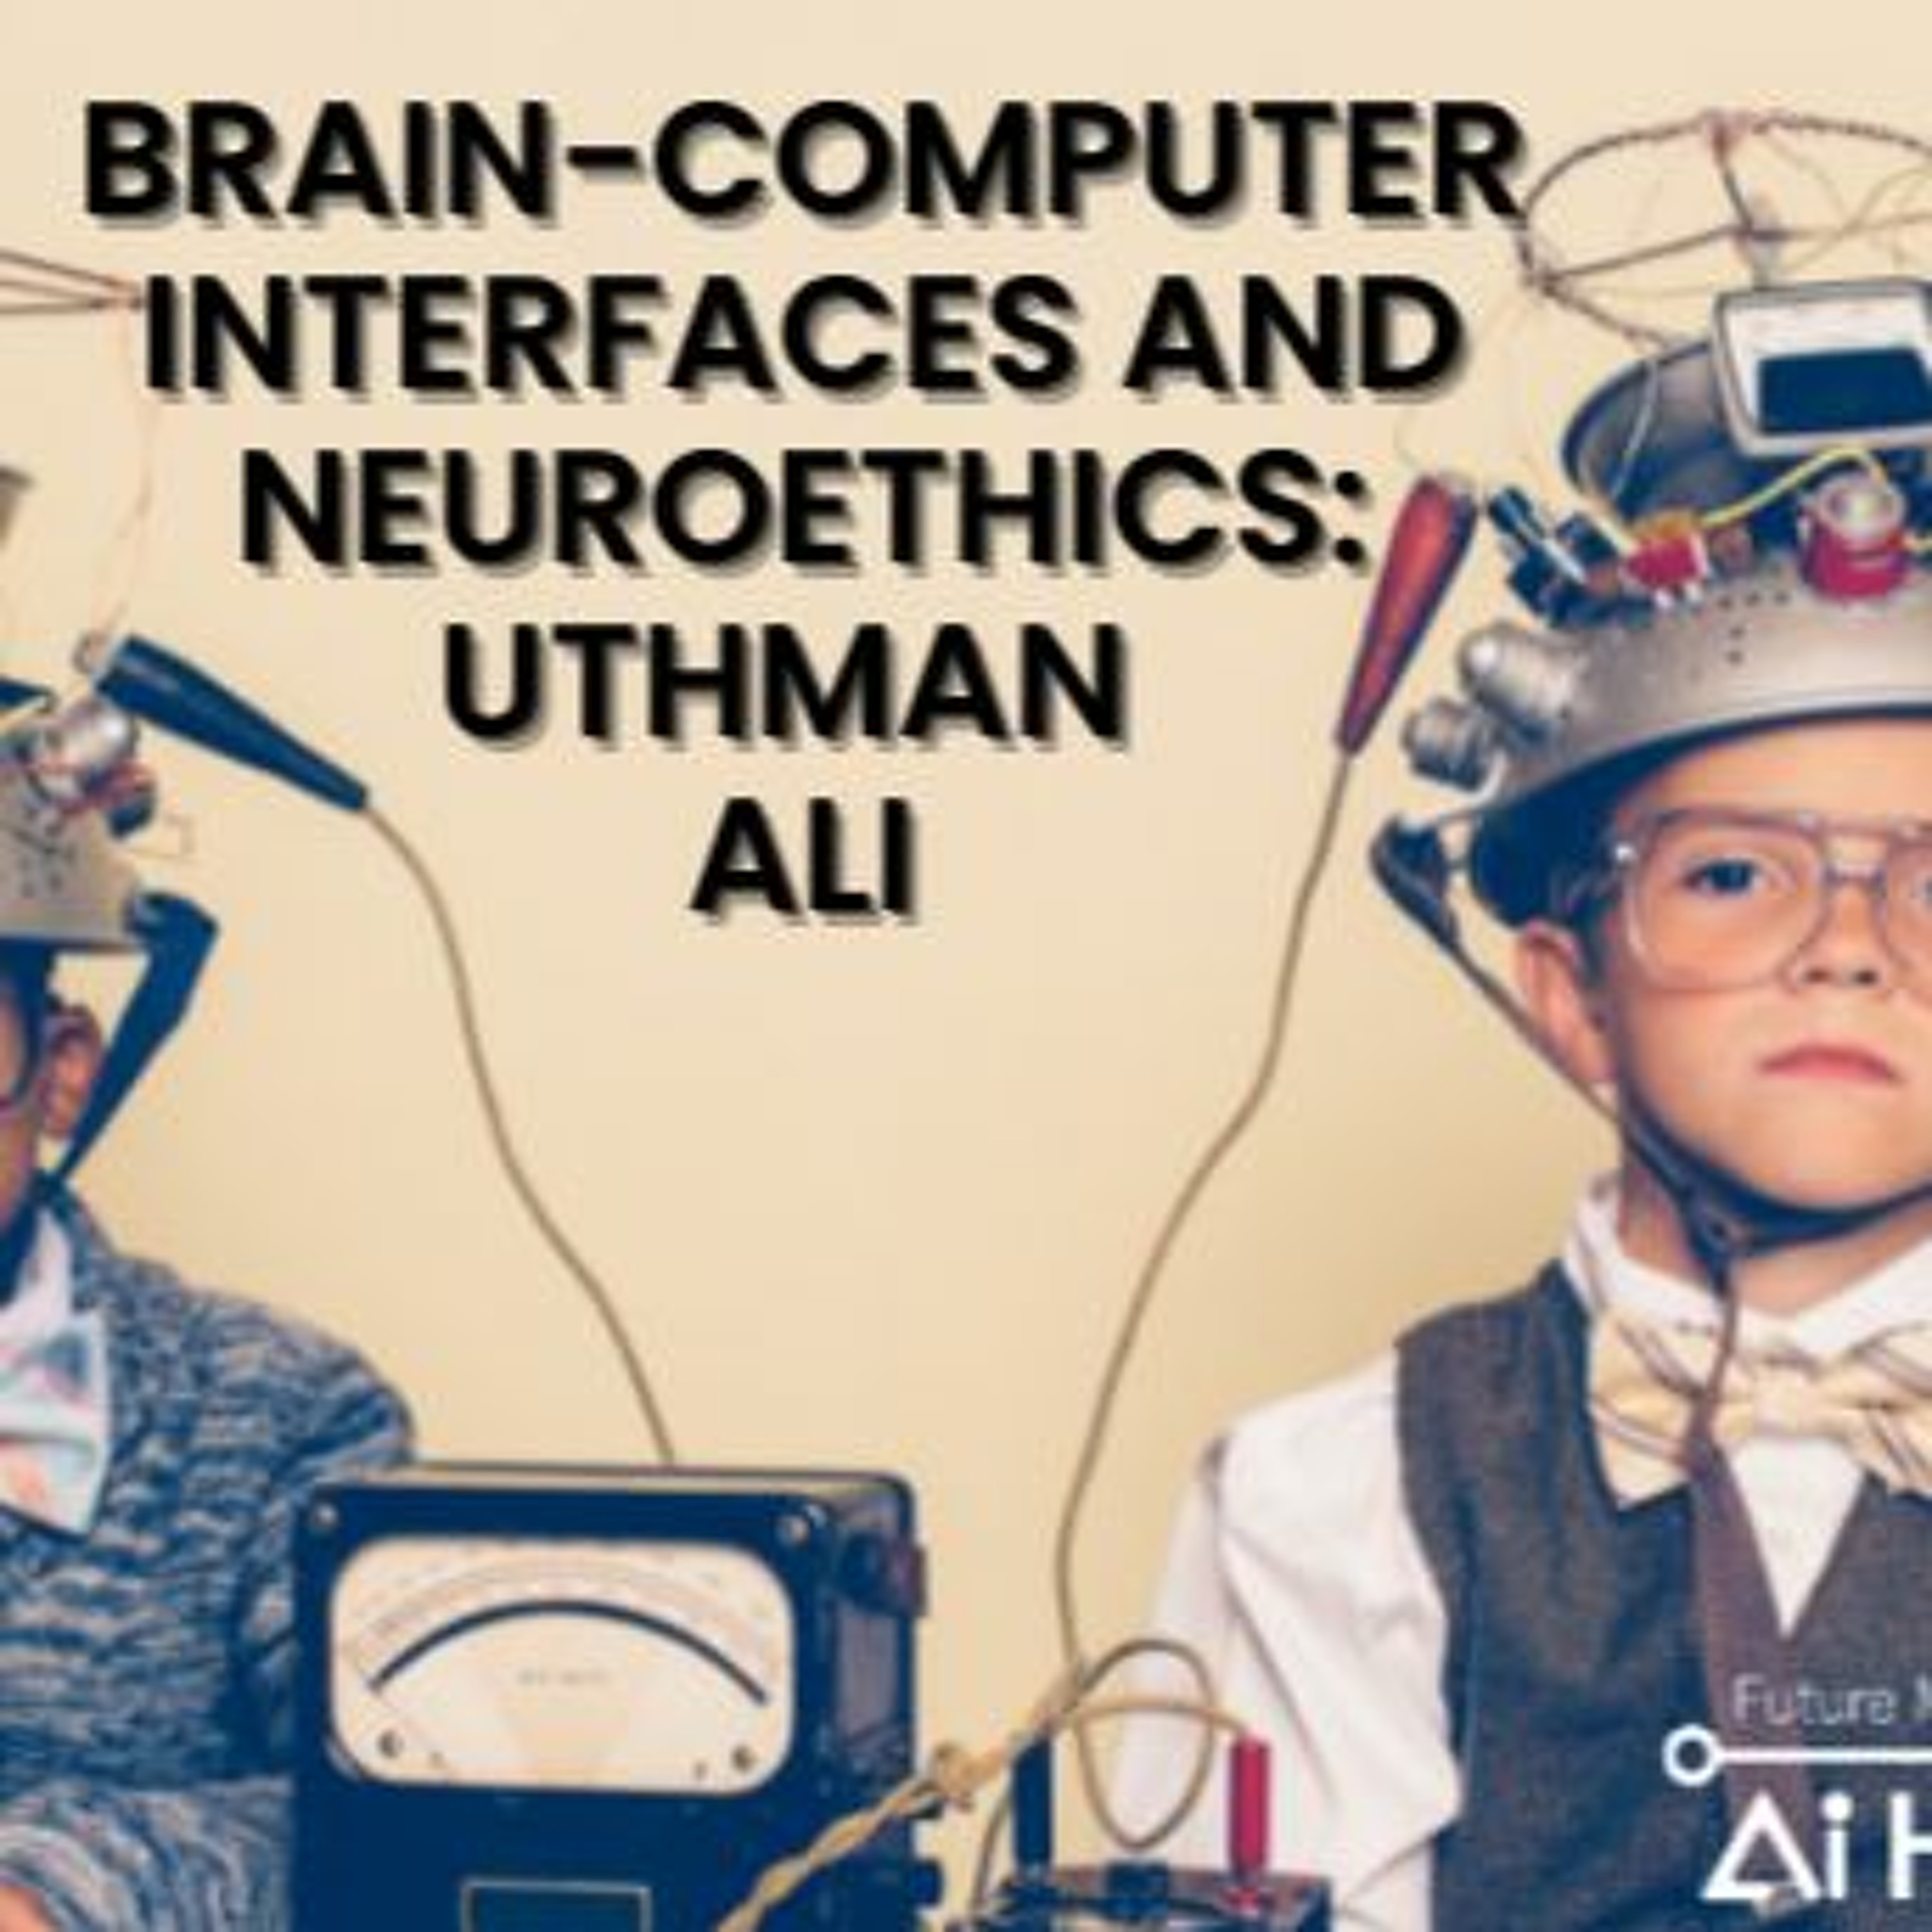 Brain-computer interfaces and neuroethics with Uthman Ali